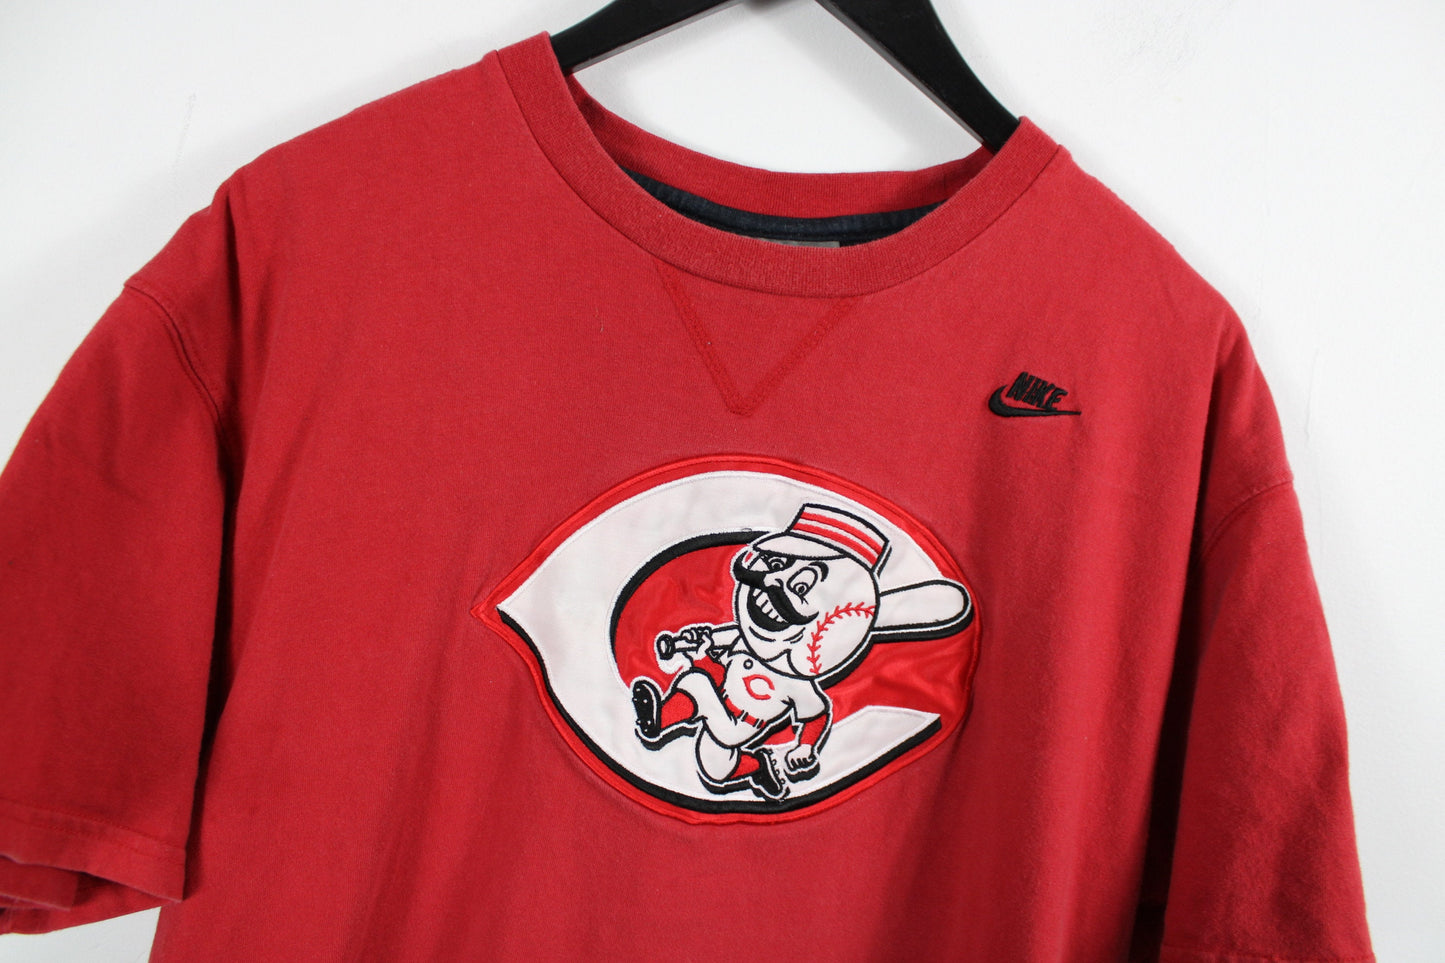 World Series T-Shirt / Cincinnati Reds MLB Baseball Tee Shirt / 90s Vintage Sports Team Graphic Promo